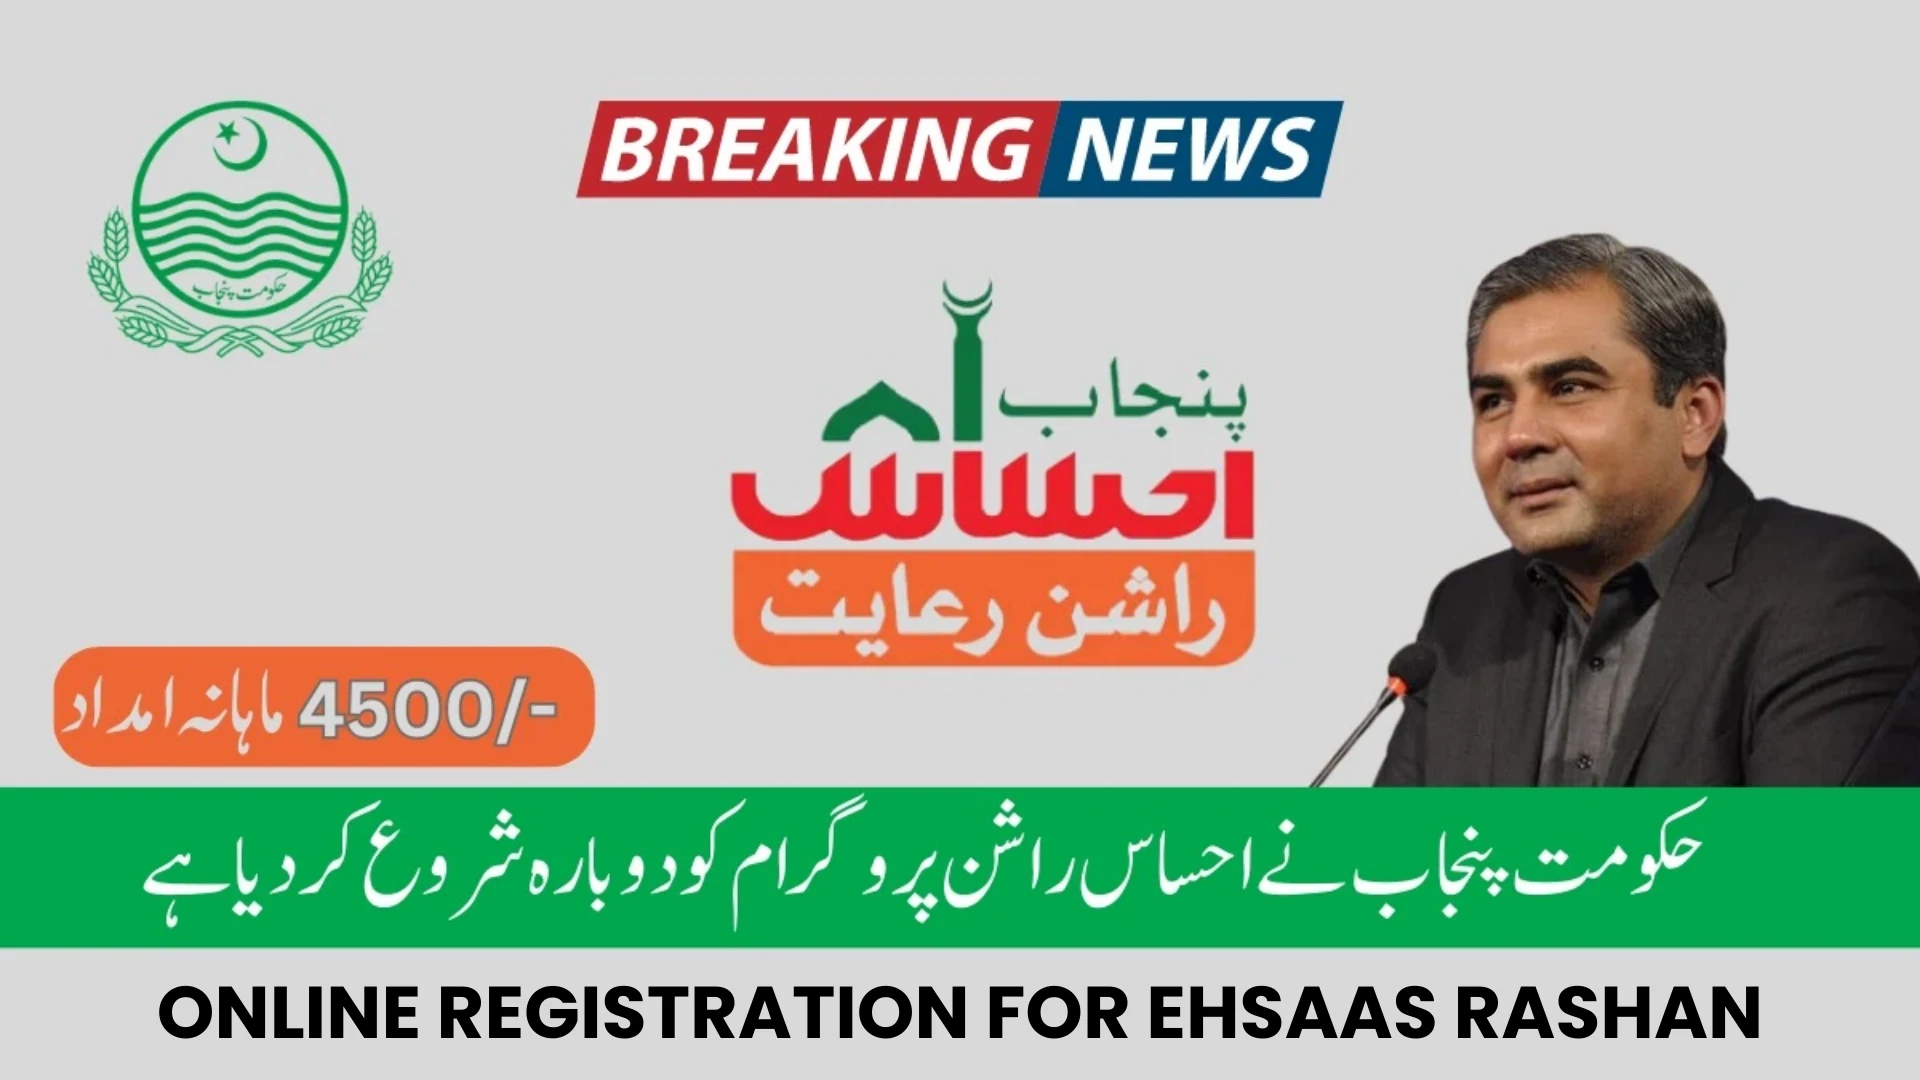 Online registration for Ehsaas rashan